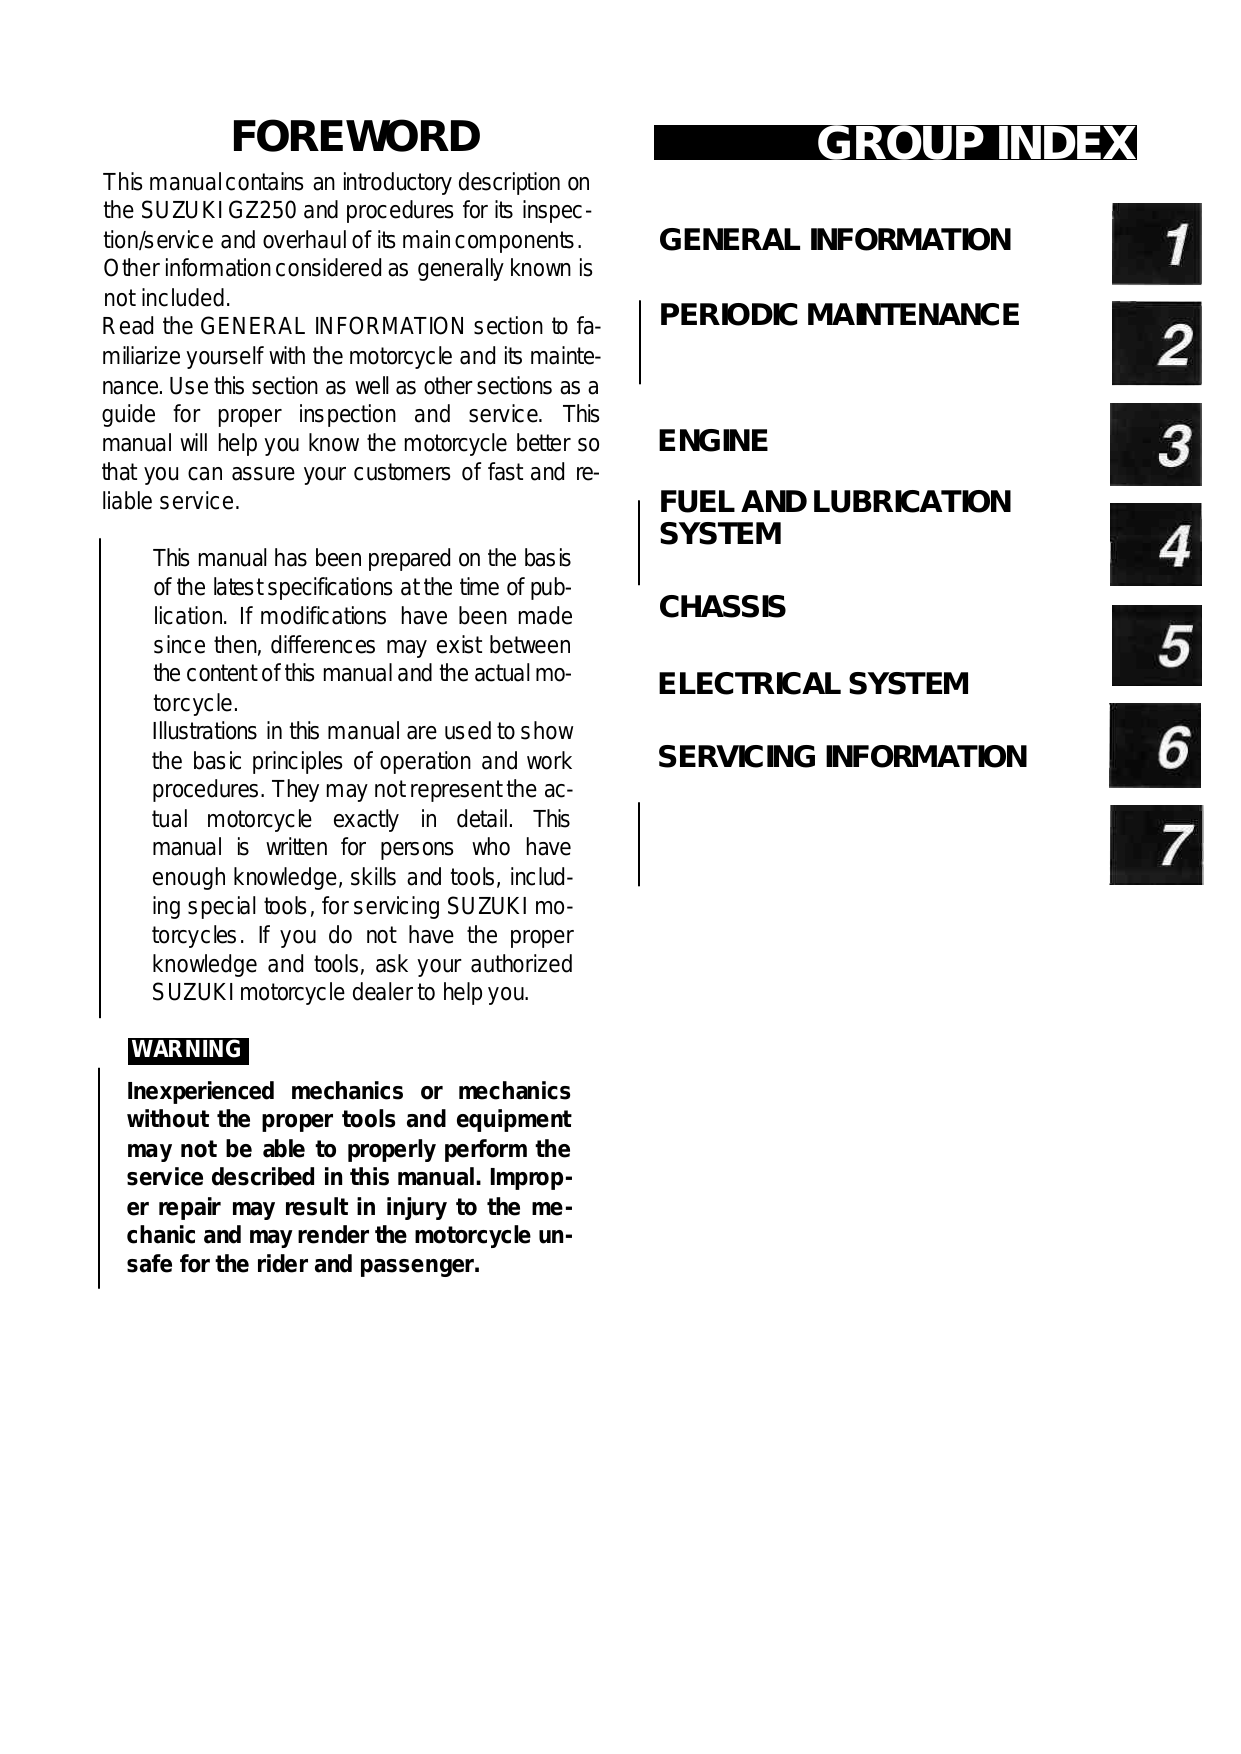 1999 Suzuki GZ250 Marauder service, repair and shop manual Preview image 2